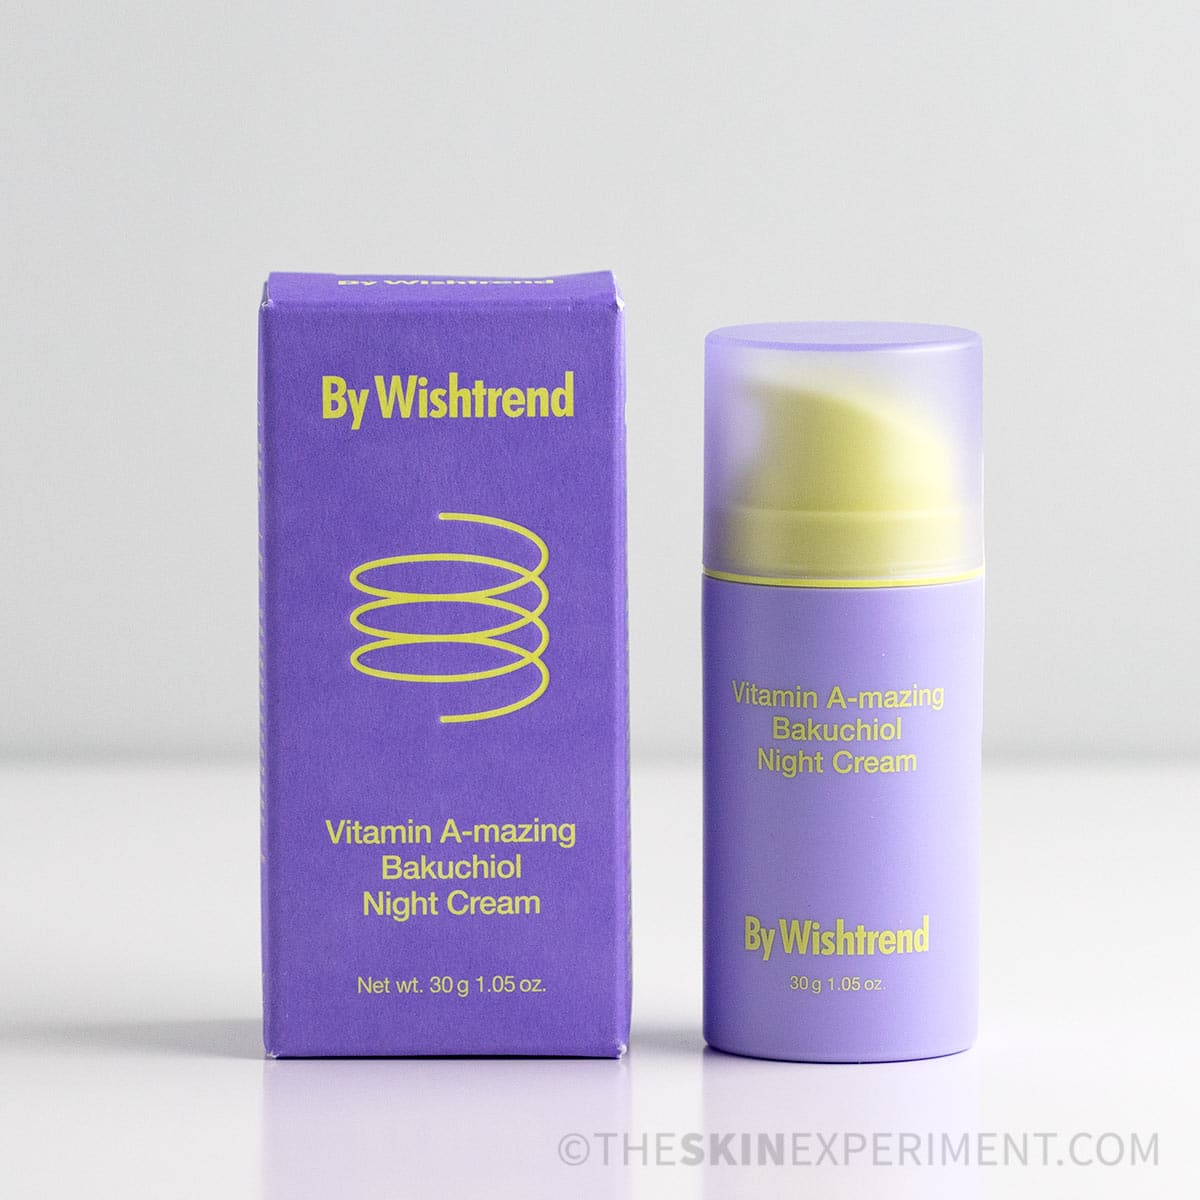 By Wishtrend Vitamin A-mazing Bakuchiol Night Cream Review